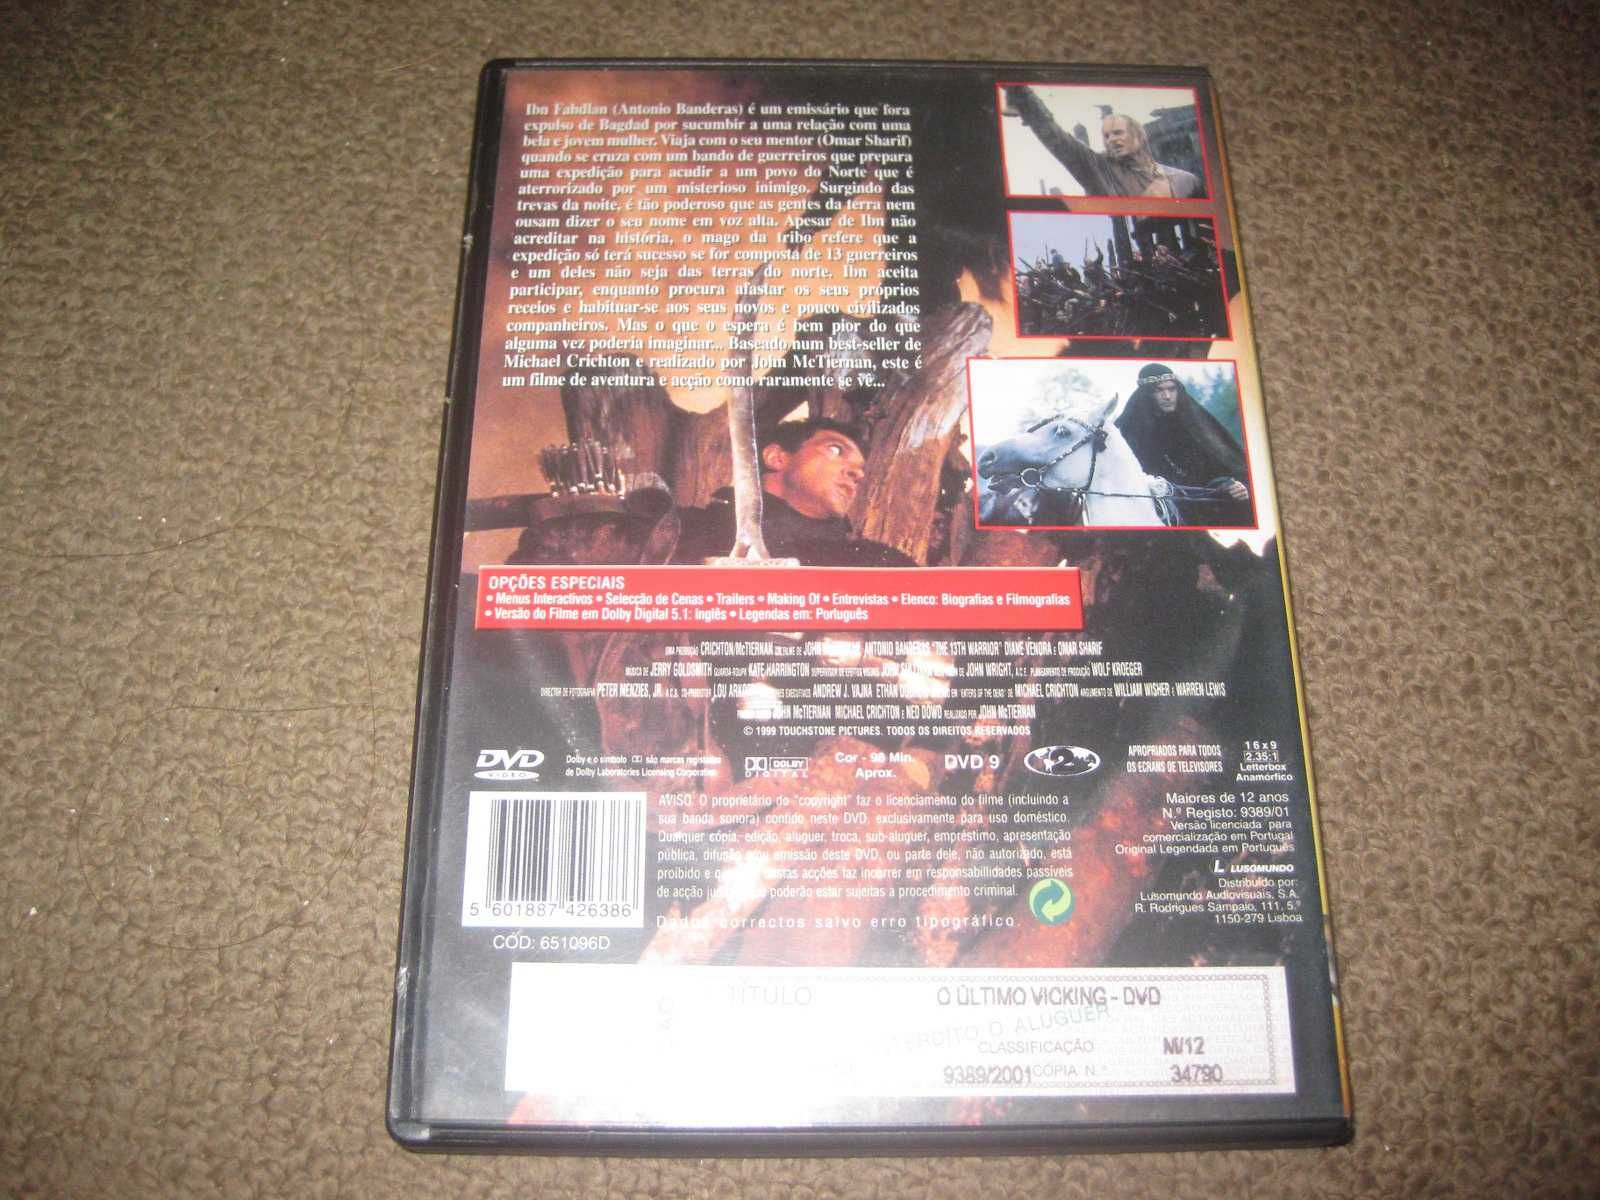 DVD "O Último Viking" com Antonio Banderas